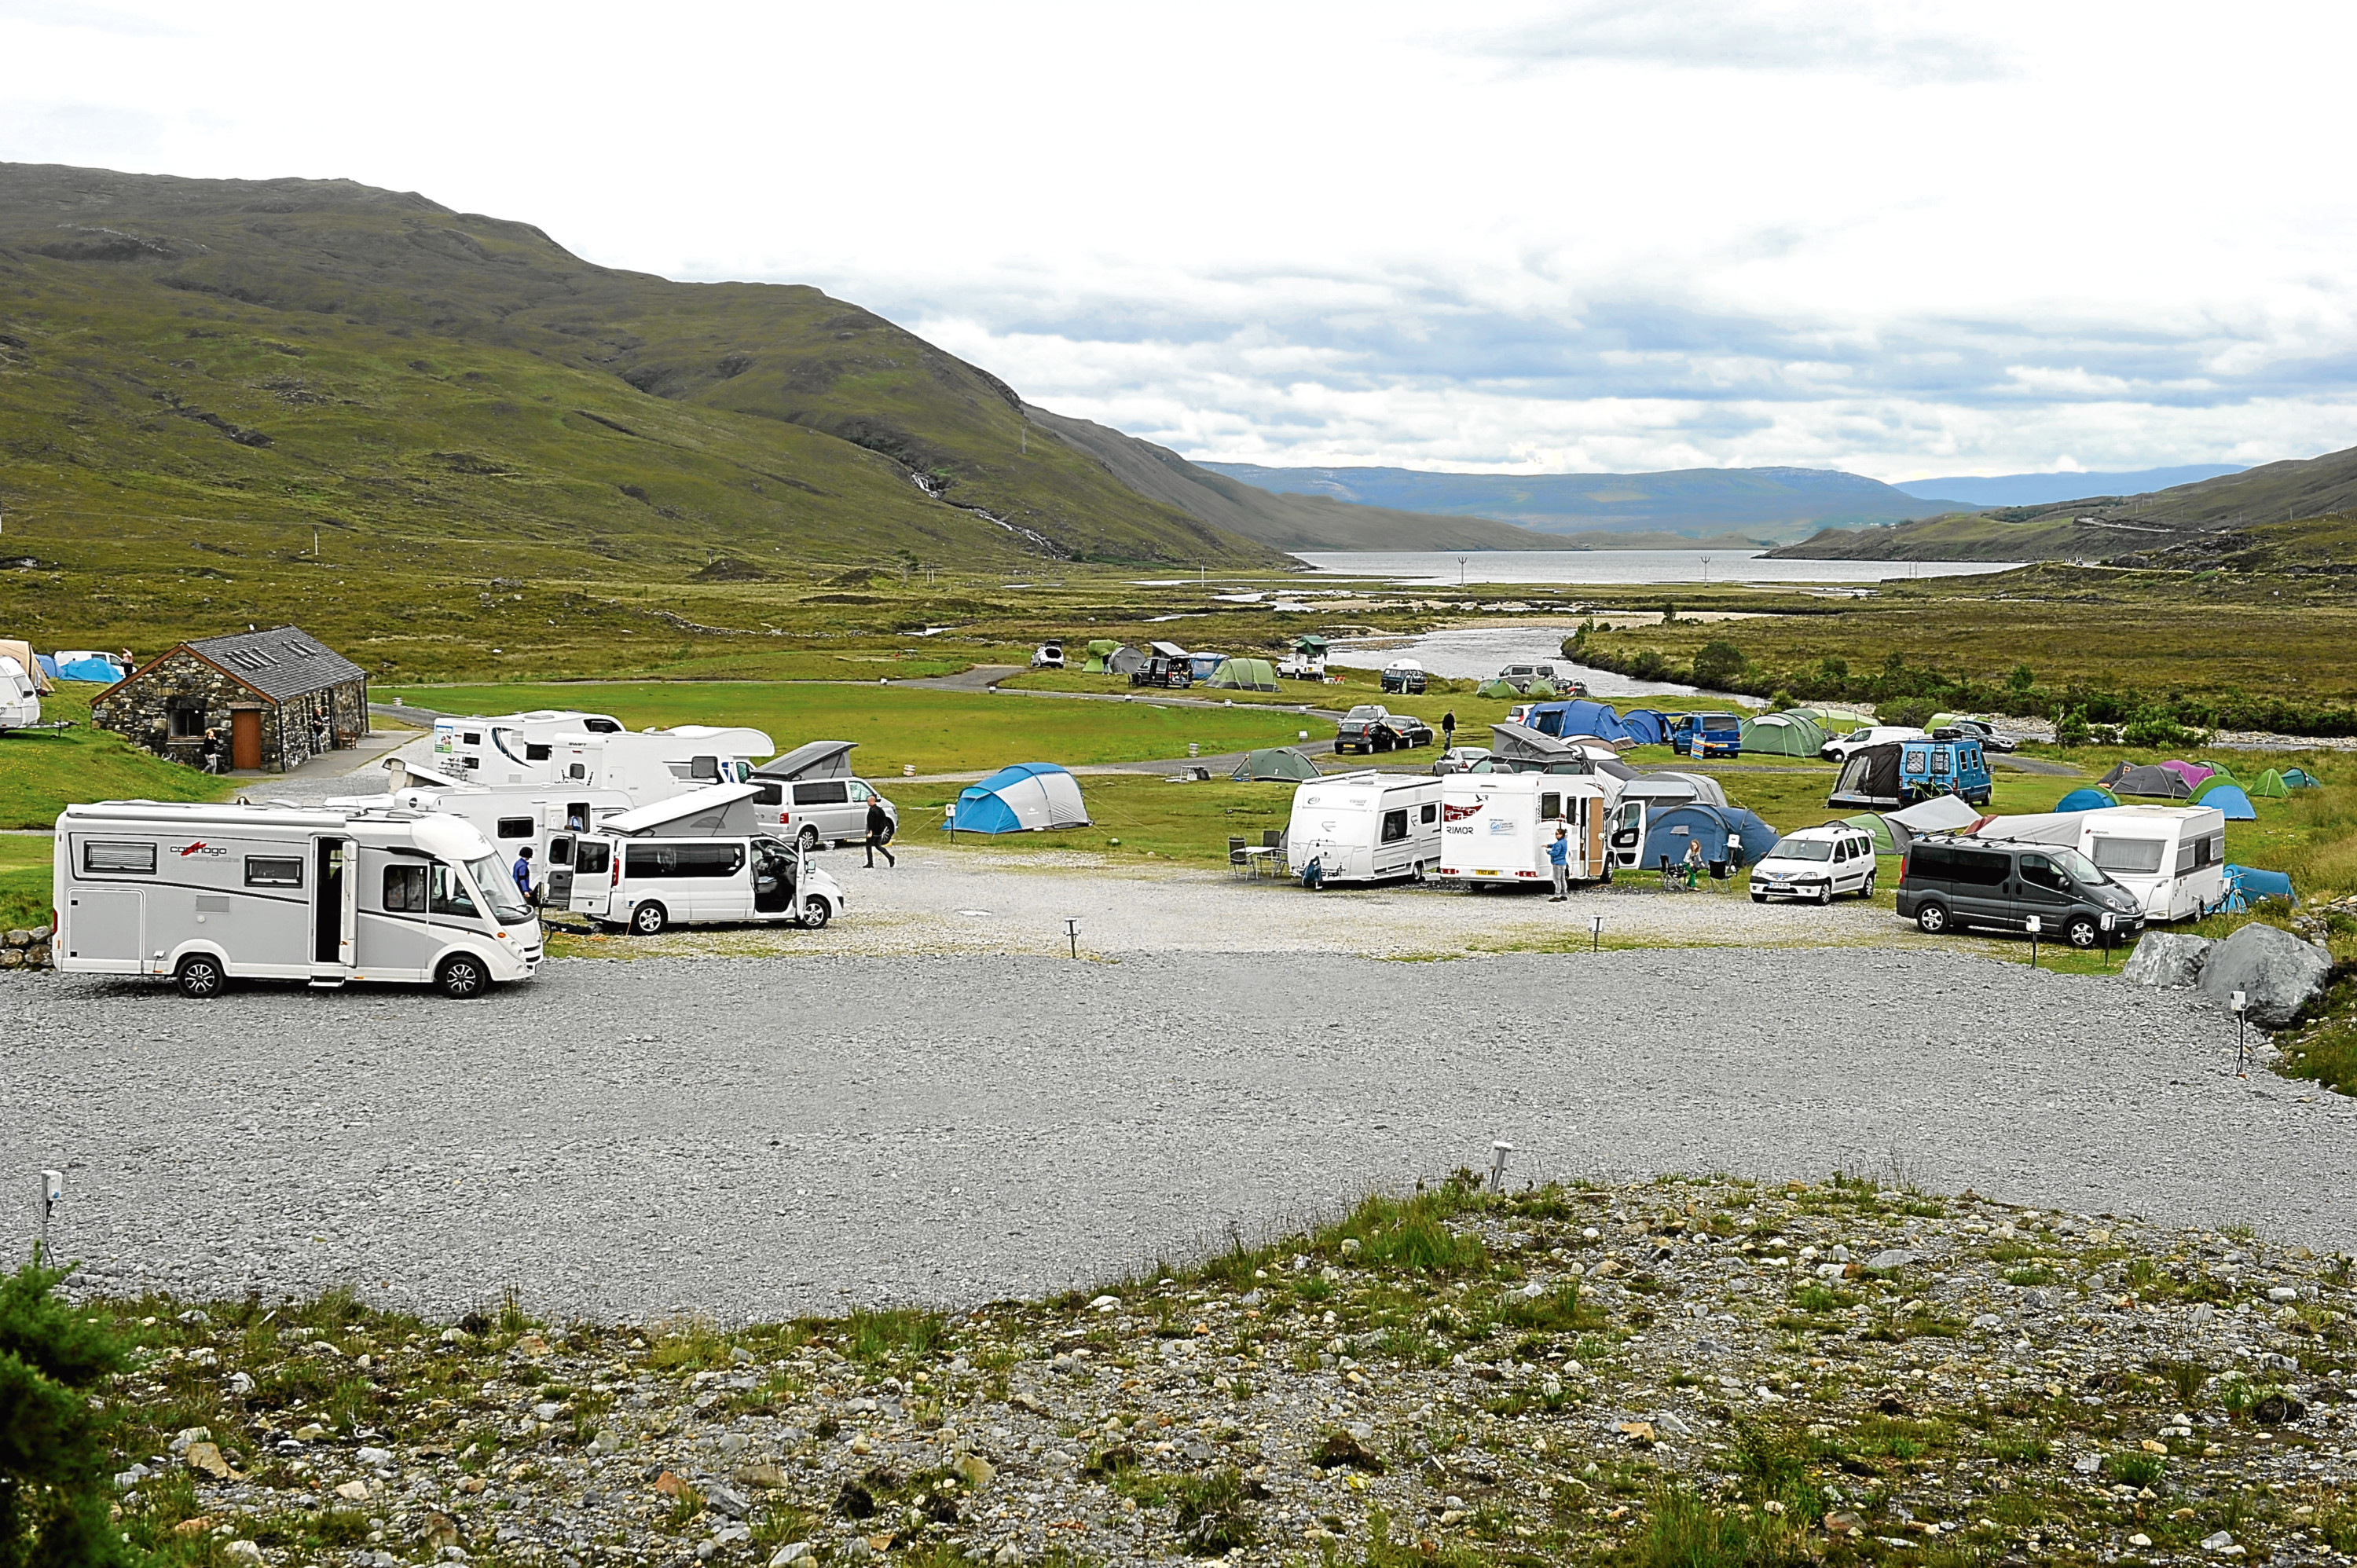 Sligachan camp site in Skye